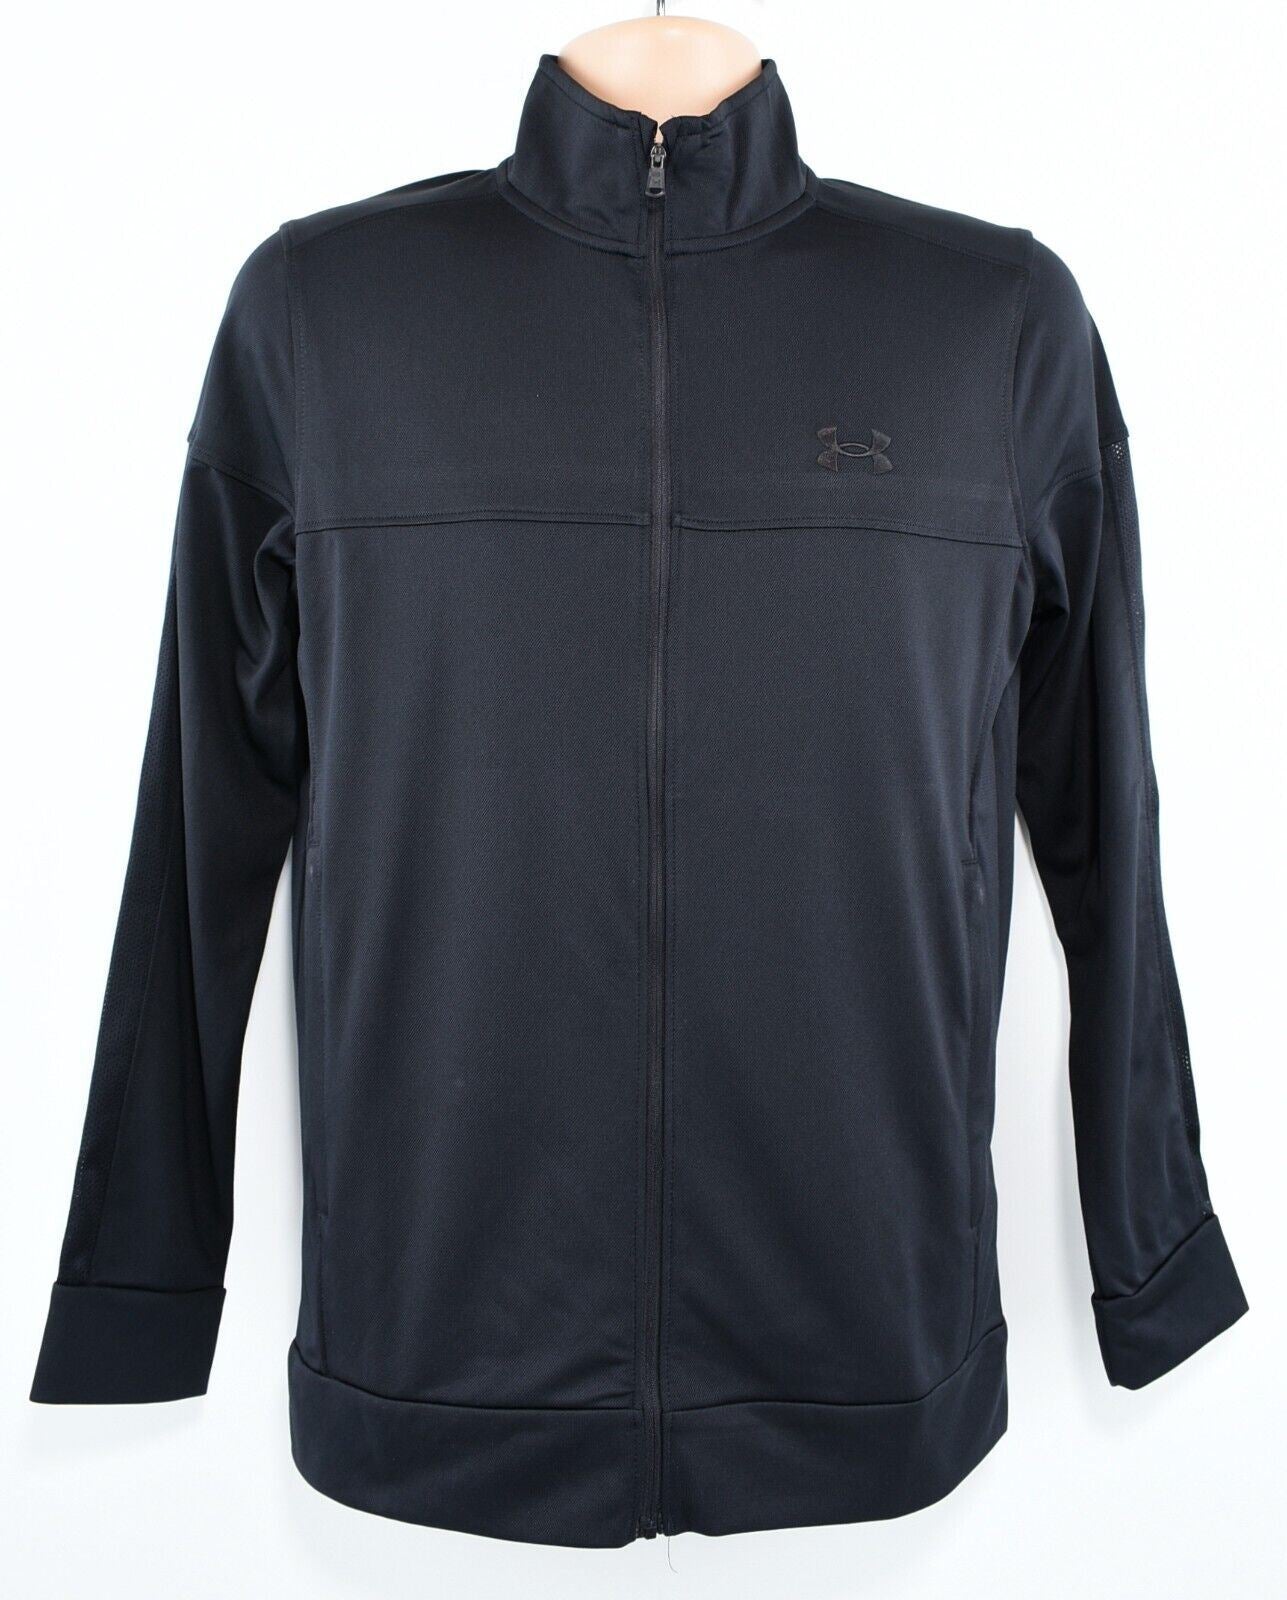 UNDER ARMOUR Men's Sportstyle Zip Tracktop / Tricot Jacket, Black, size S